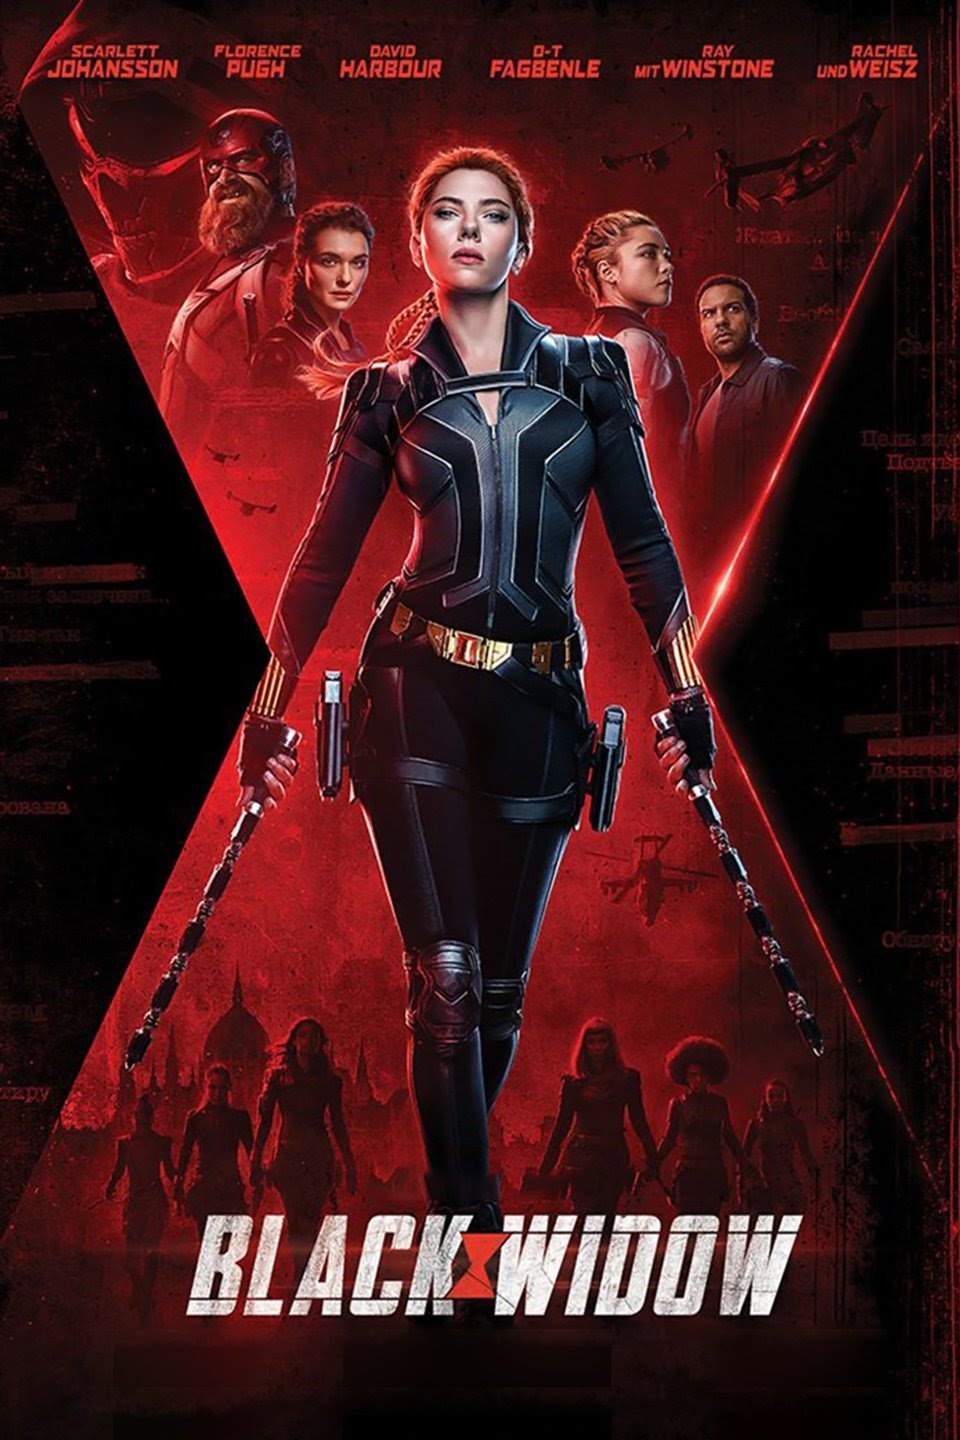 Black Widow Lawsuit Settled with Scarlett Johansson and Disney